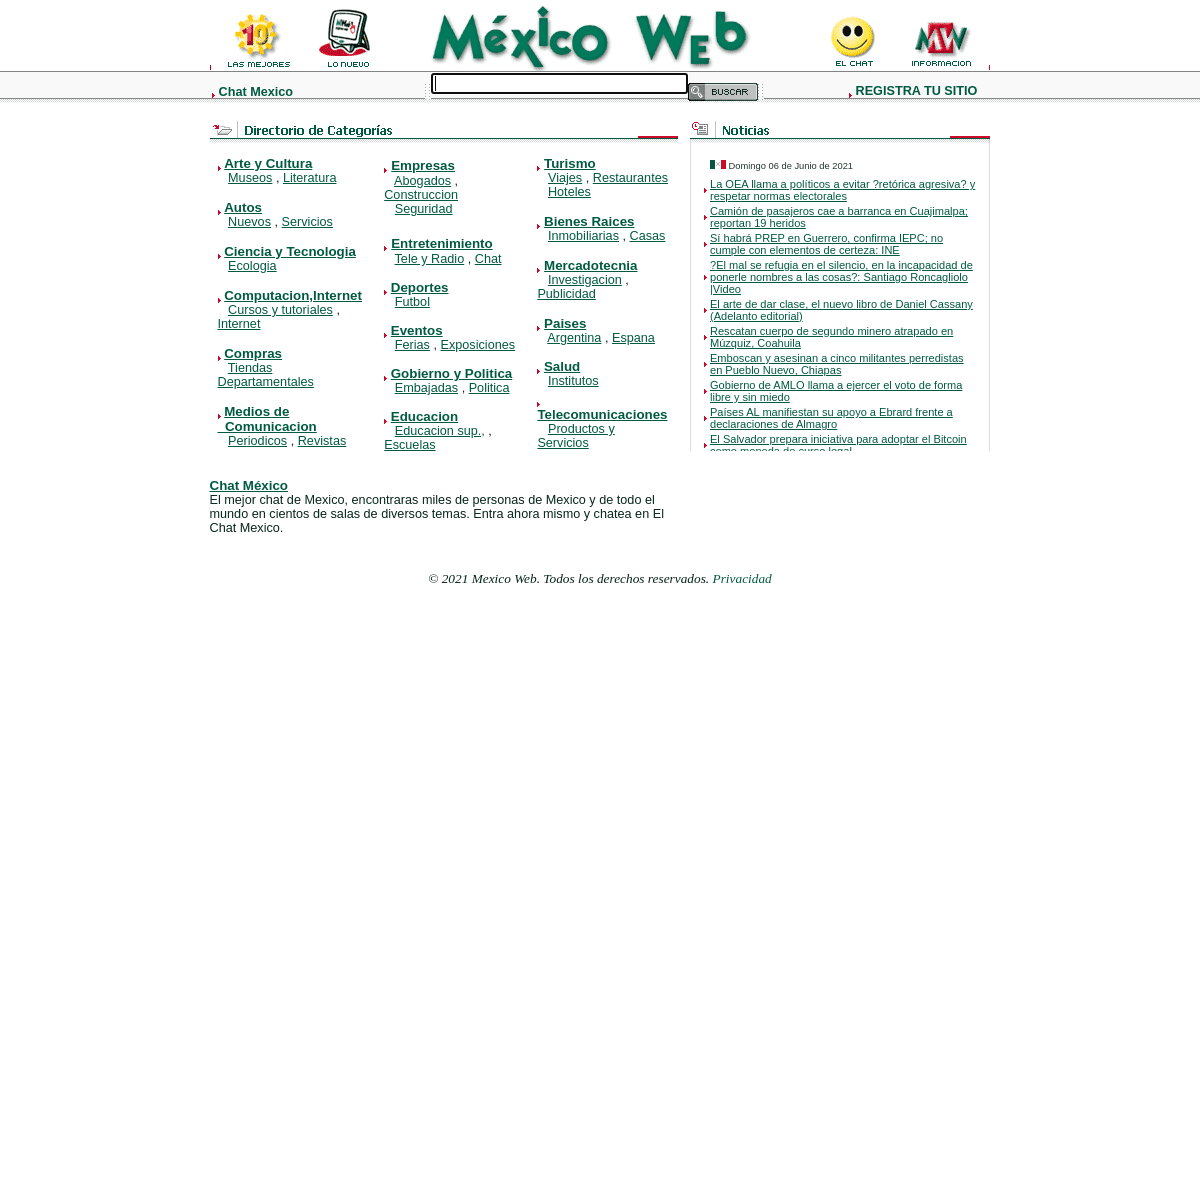 A complete backup of https://mexicoweb.com.mx